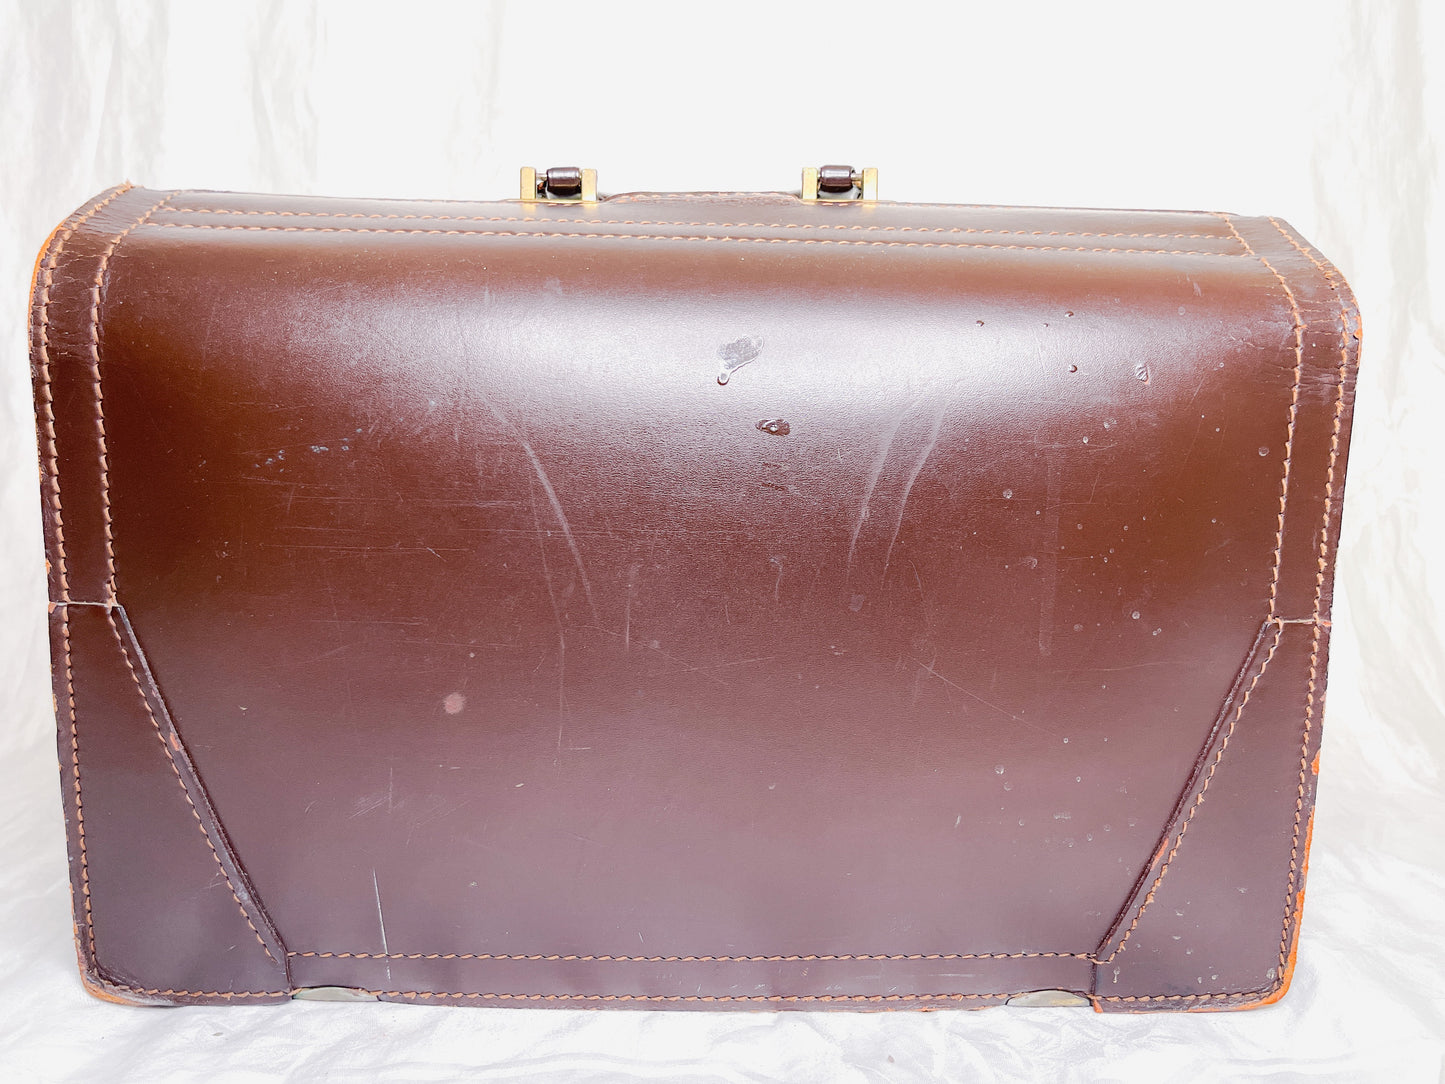 Vintage Price Waterhouse & Co. Leather Case.